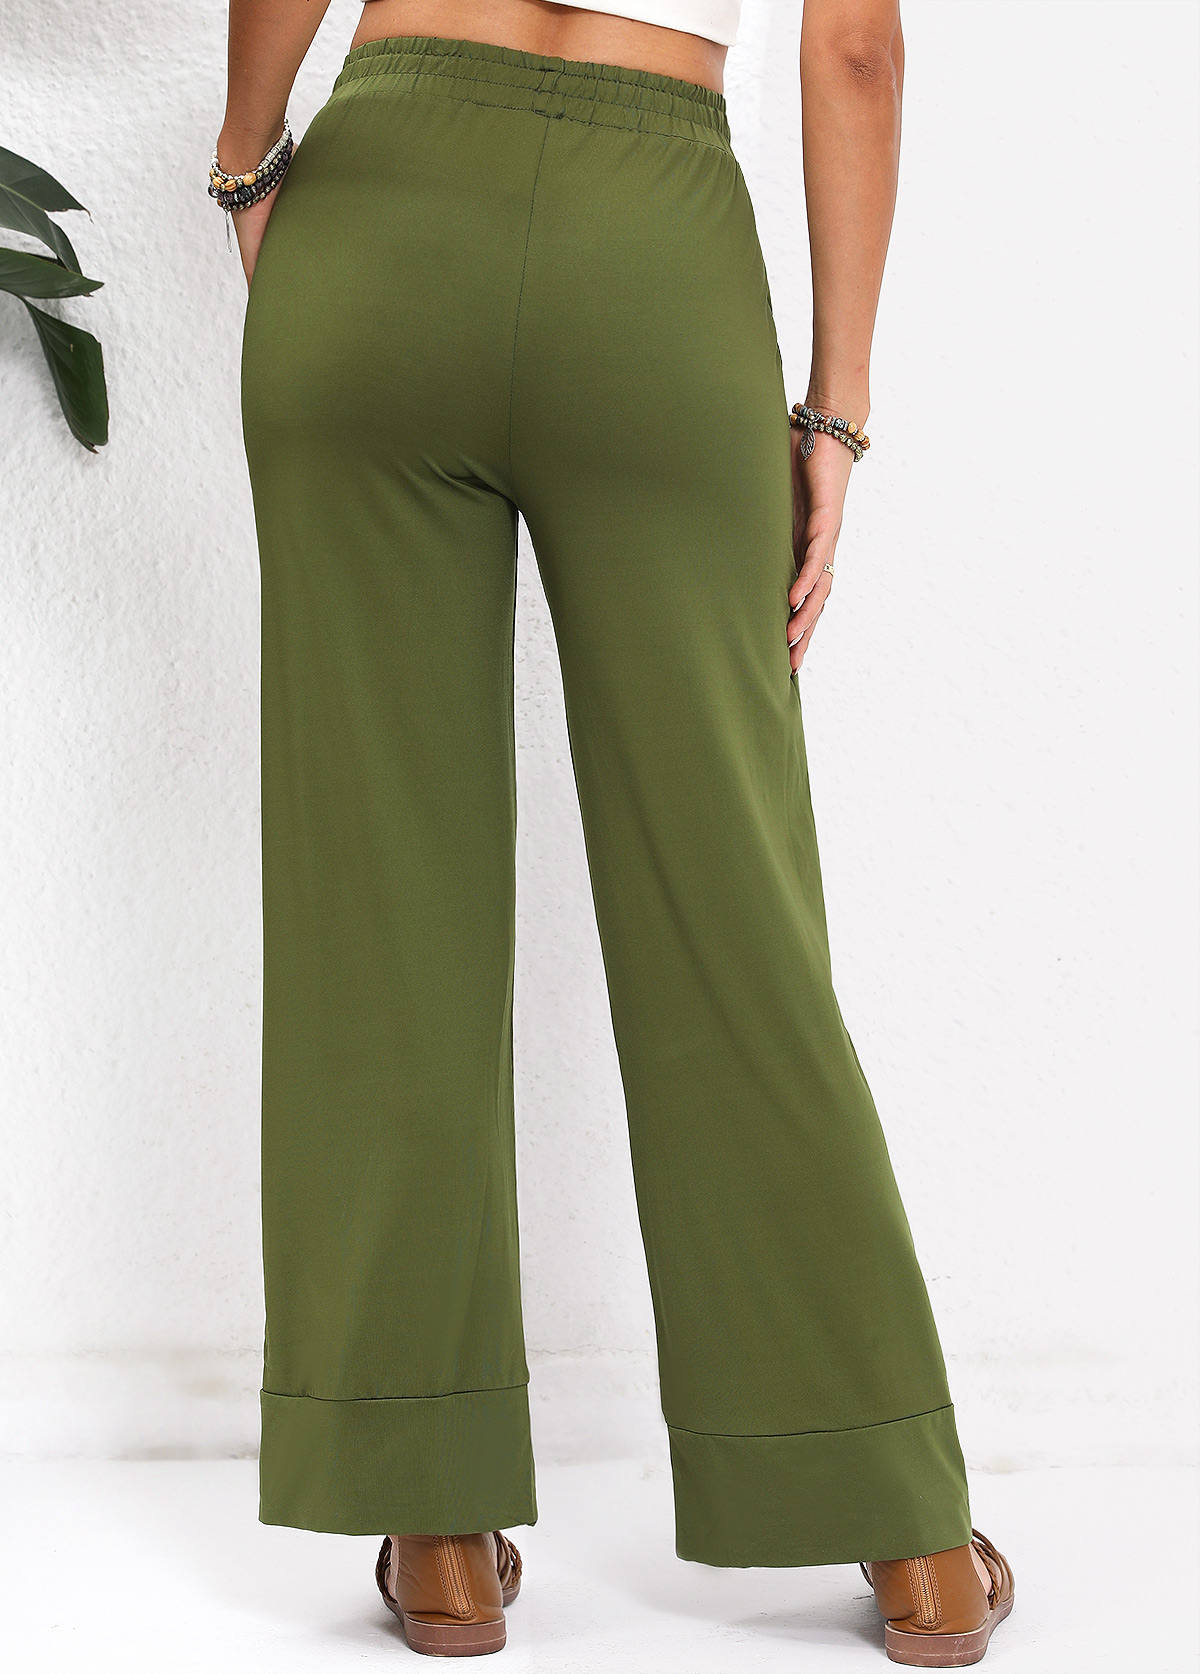 Pocket Olive Green Elastic Waist High Waisted Pants